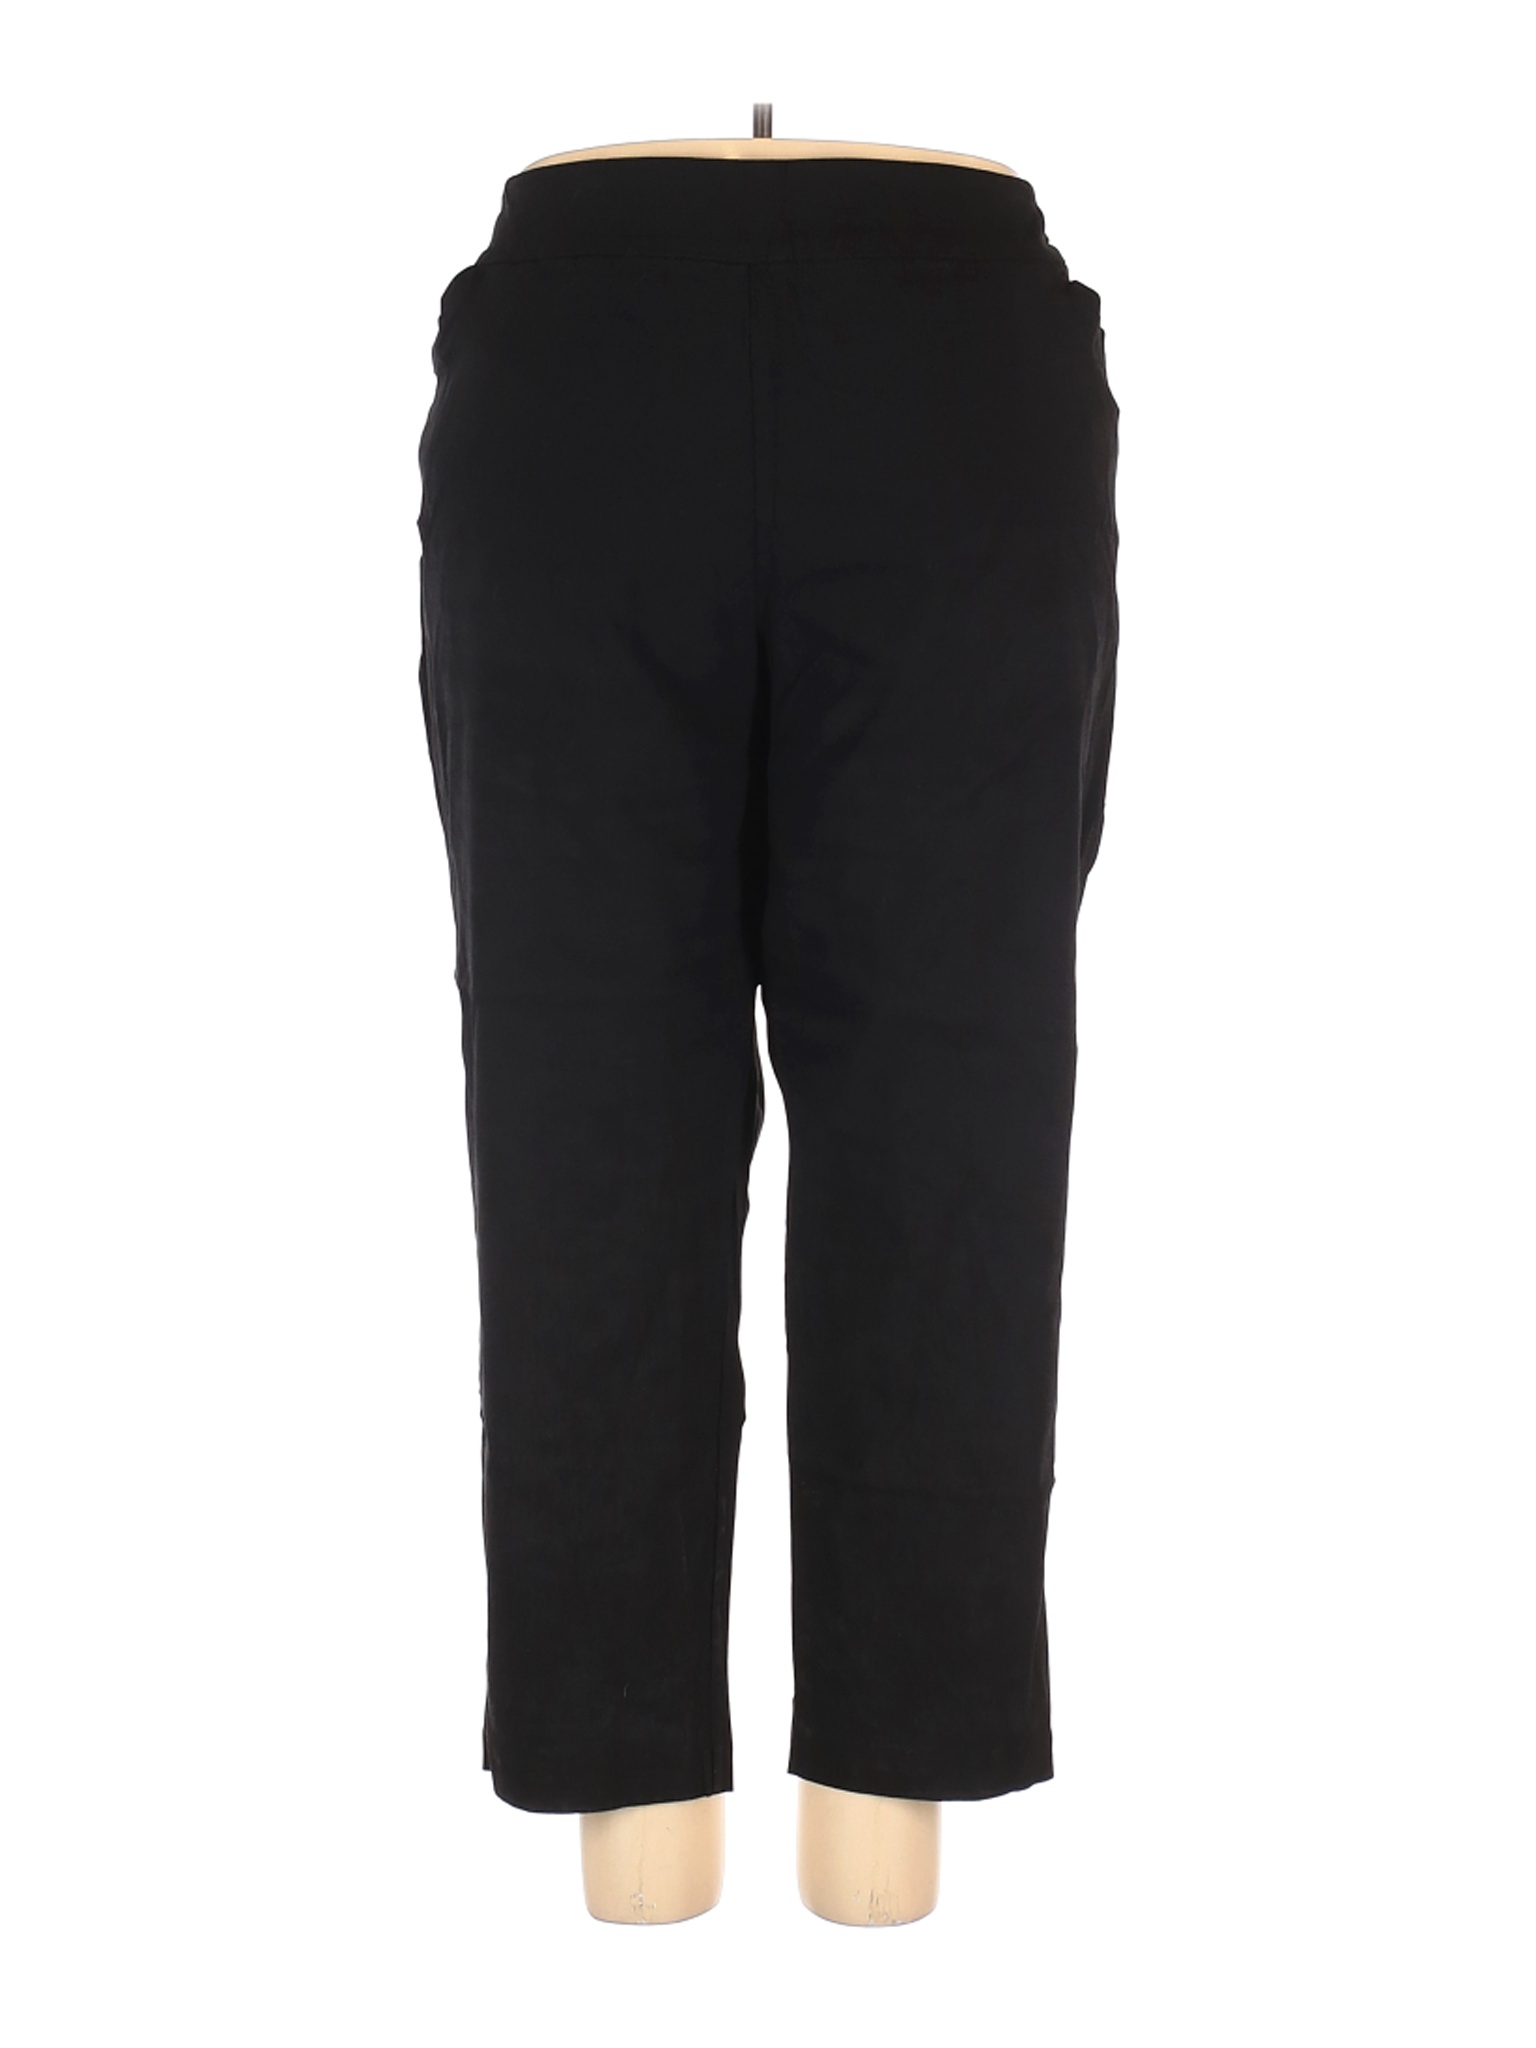 Terra & Sky Women Black Casual Pants 4X Plus | eBay